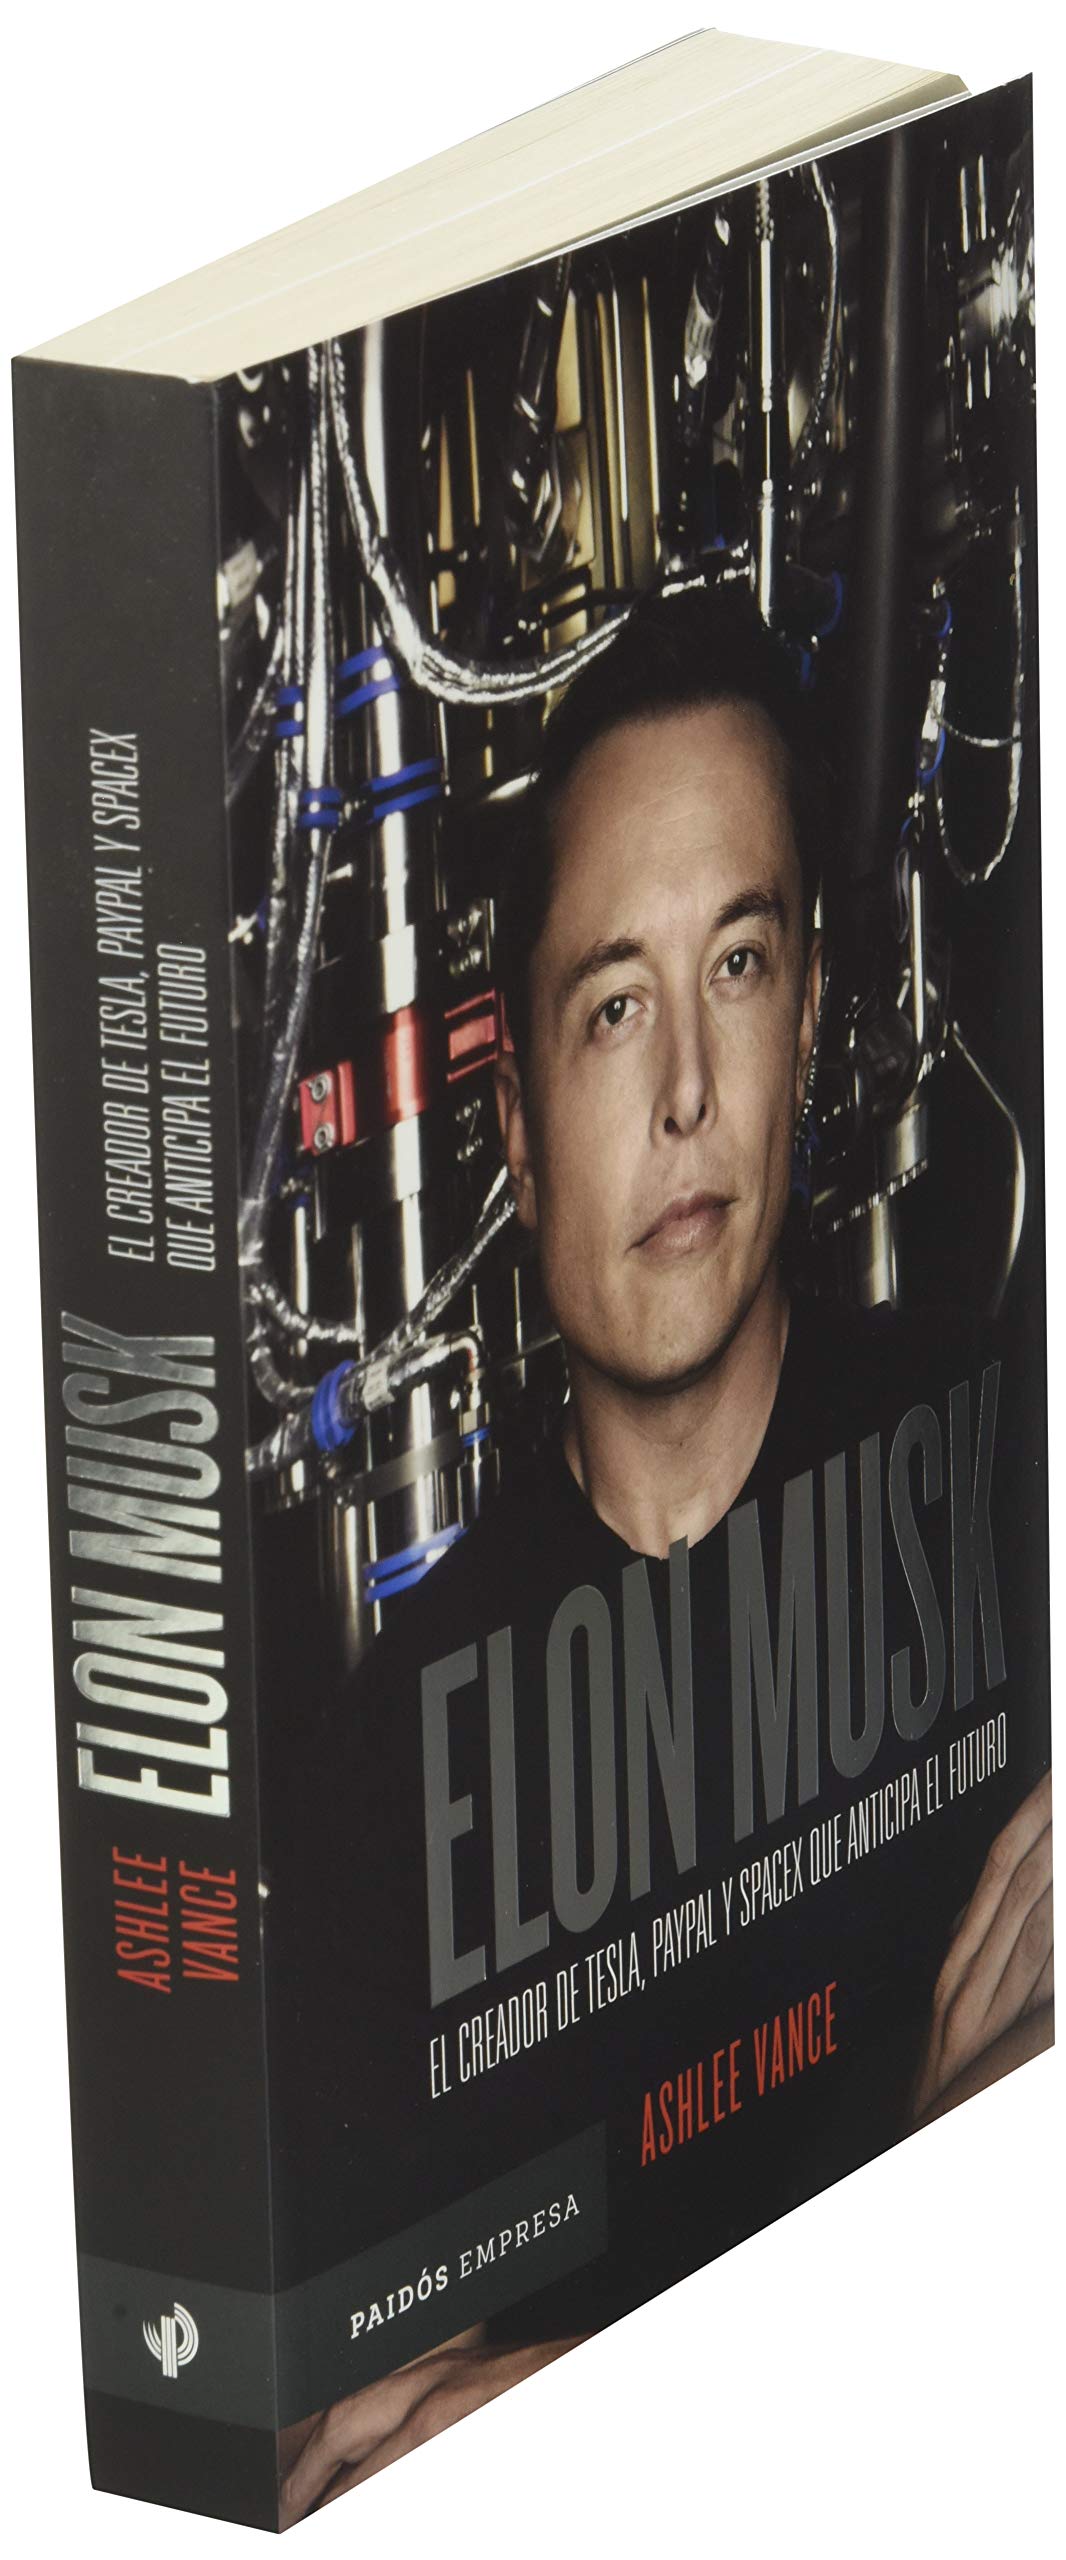 Elon Musk (SPANISH EDITION)